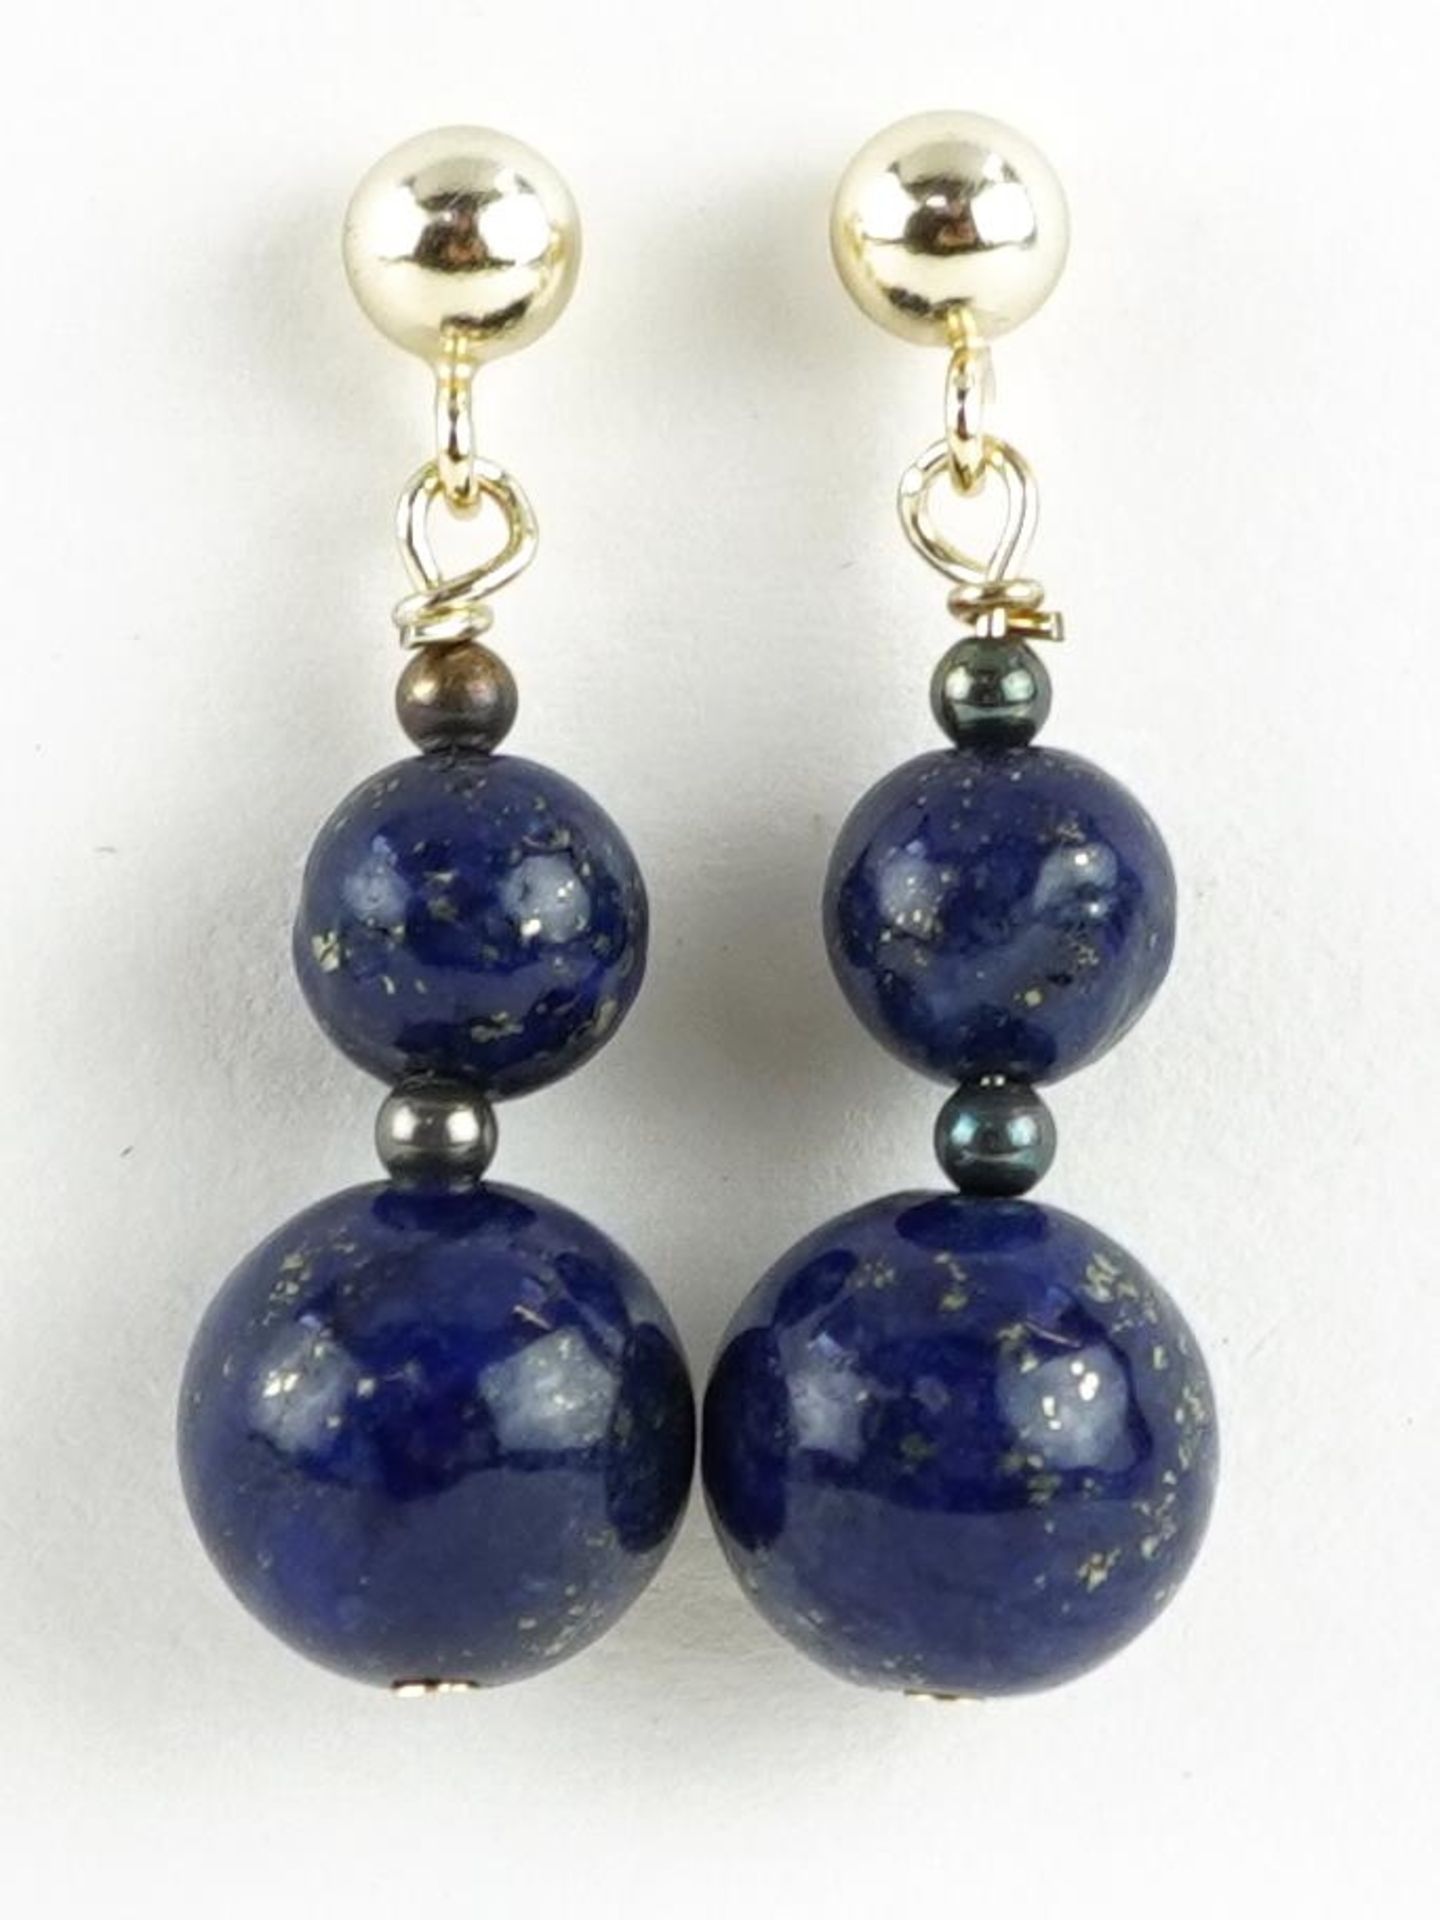 Pair of silver gilt lapis lazuli graduated drop earrings, 2.6cm high, 3.1g